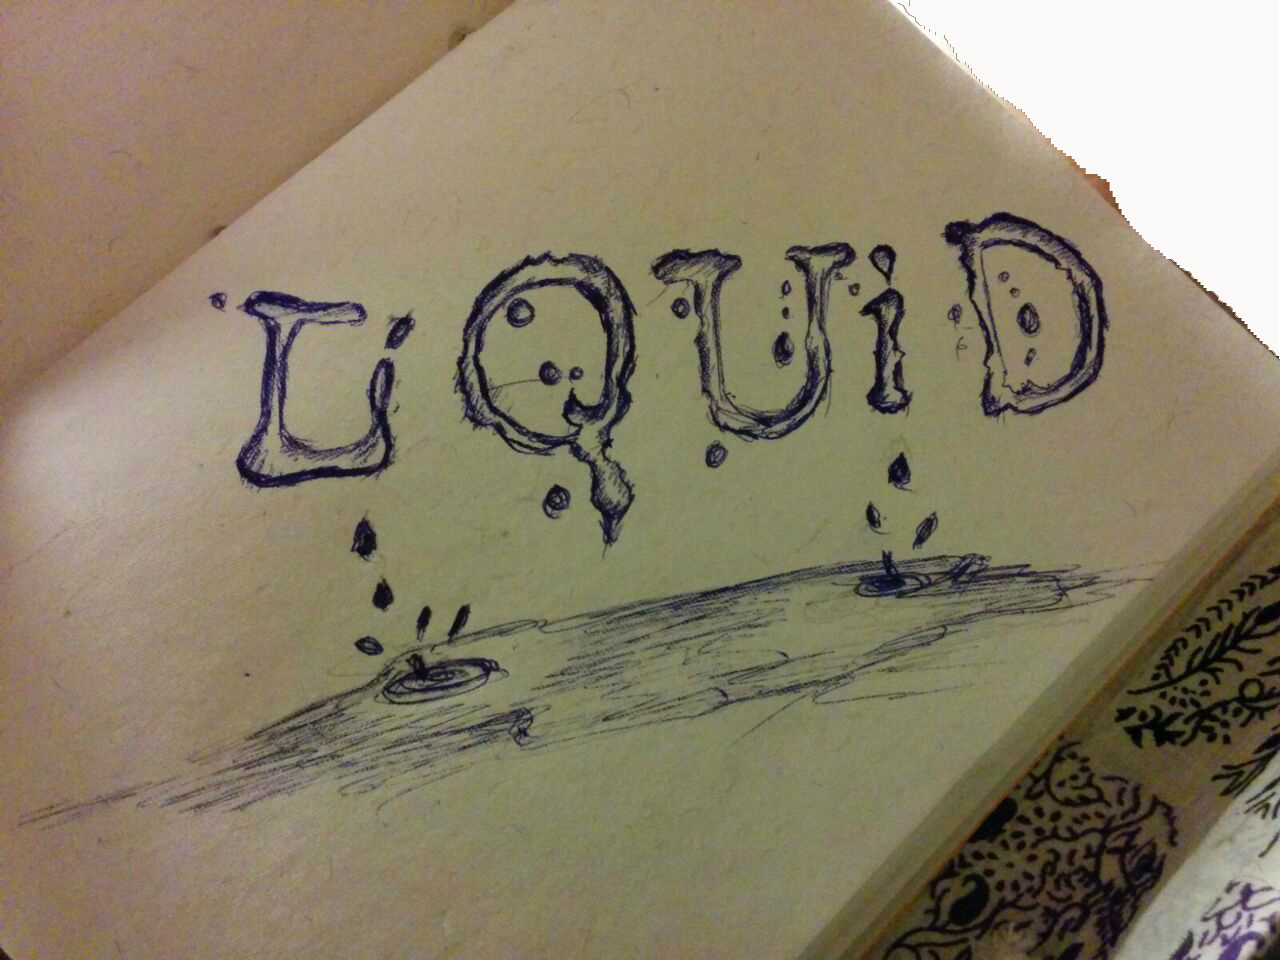 liquid phase